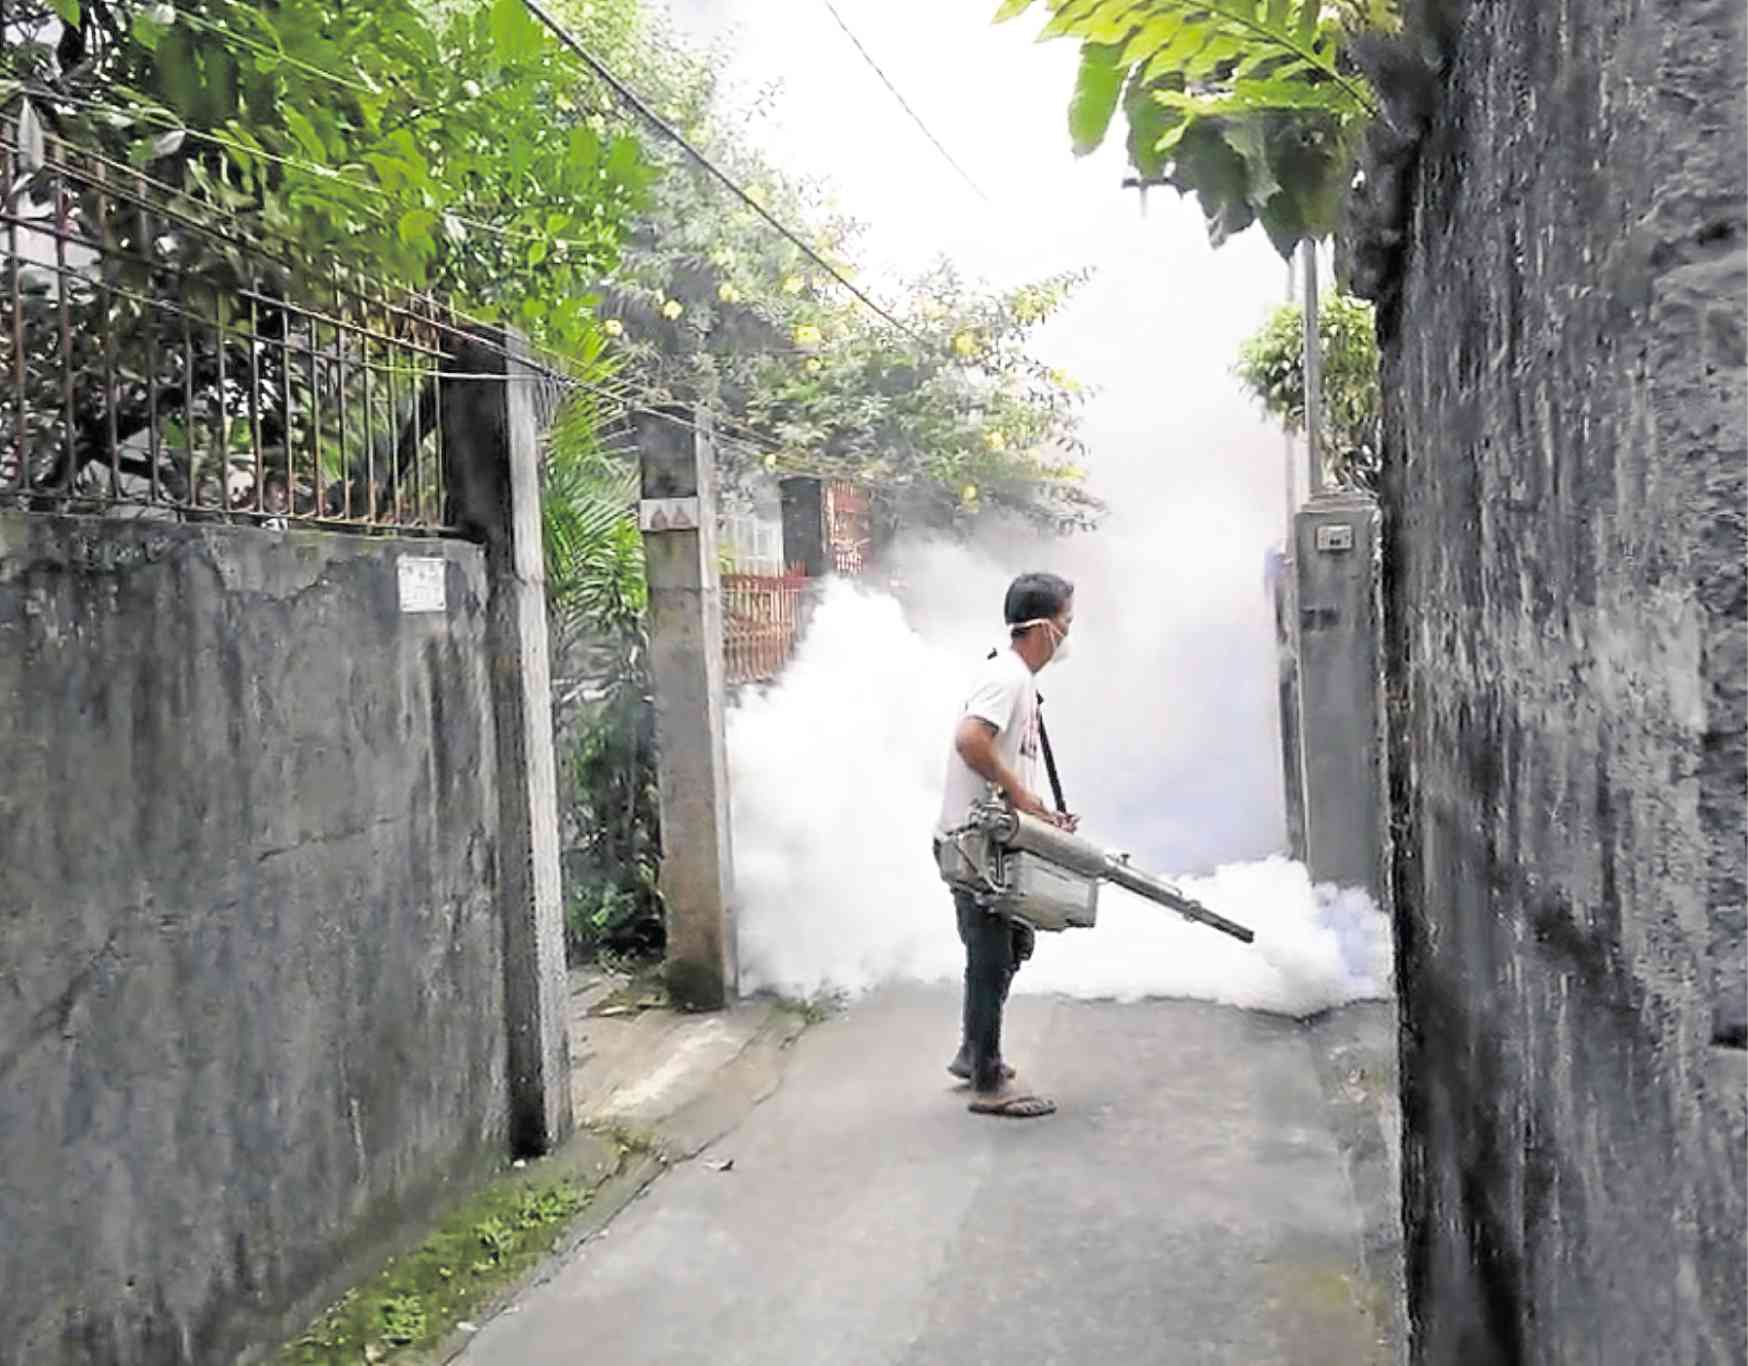 6-month dengue death toll: 63 in 3 regions